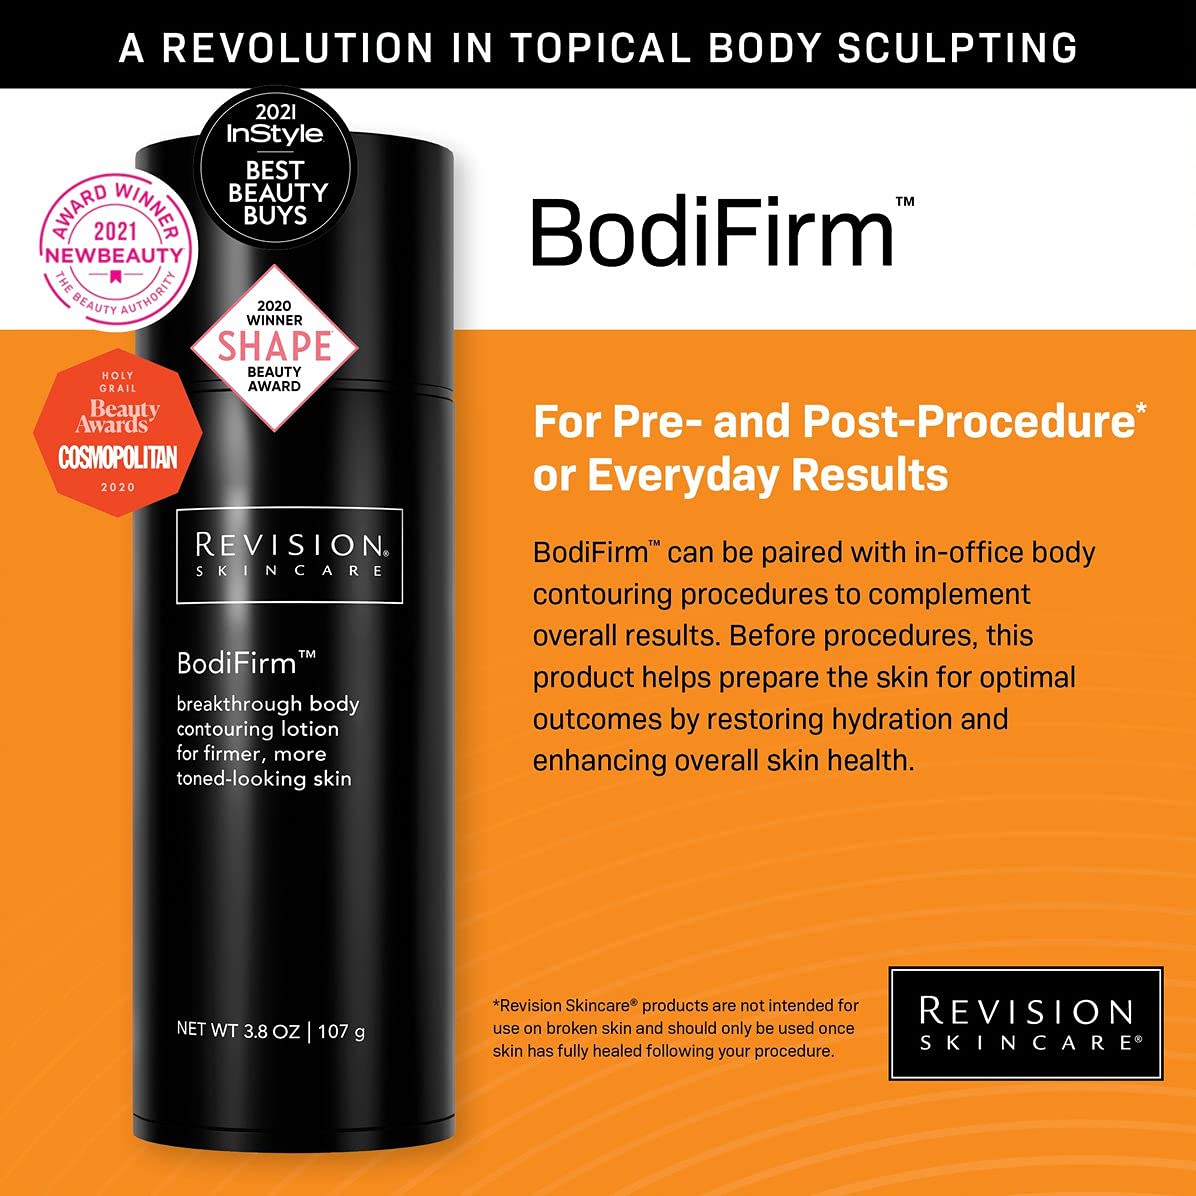 Revision Skincare BodiFirm info